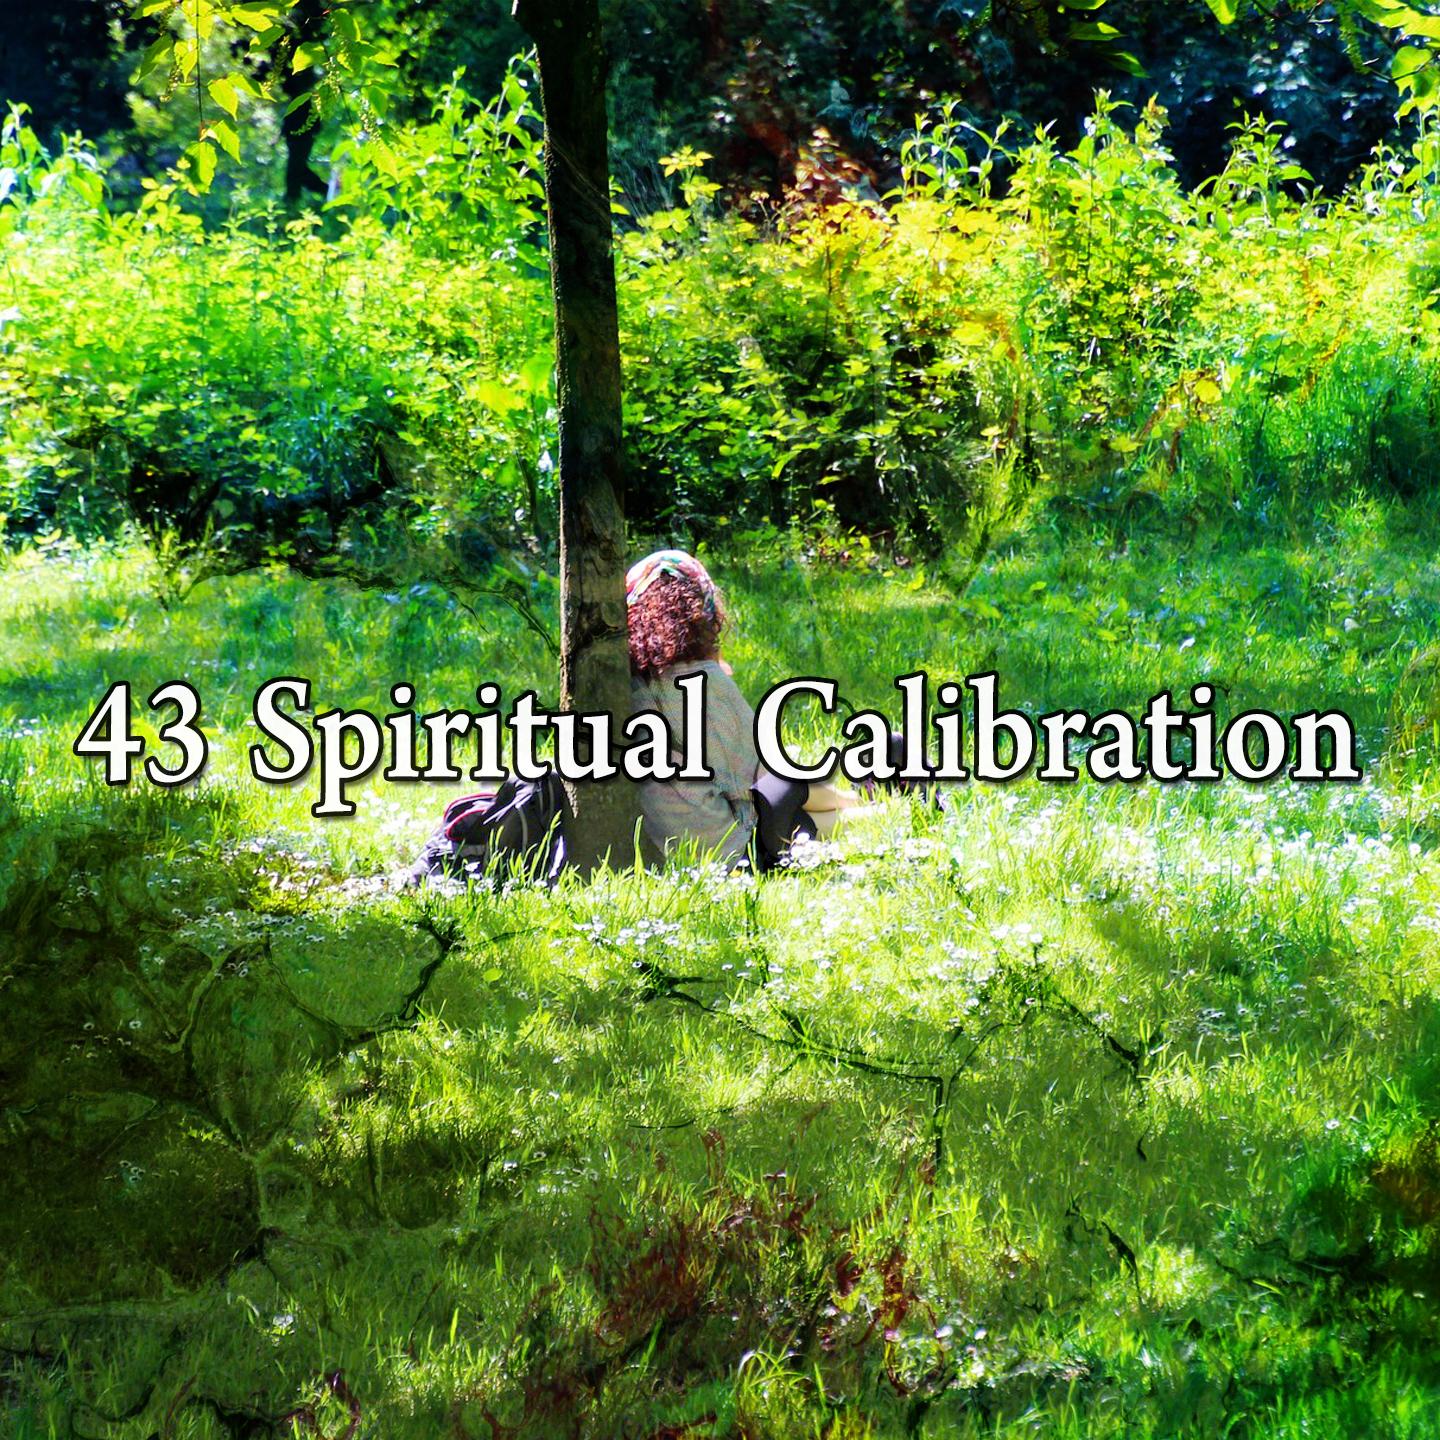 43 Spiritual Calibration